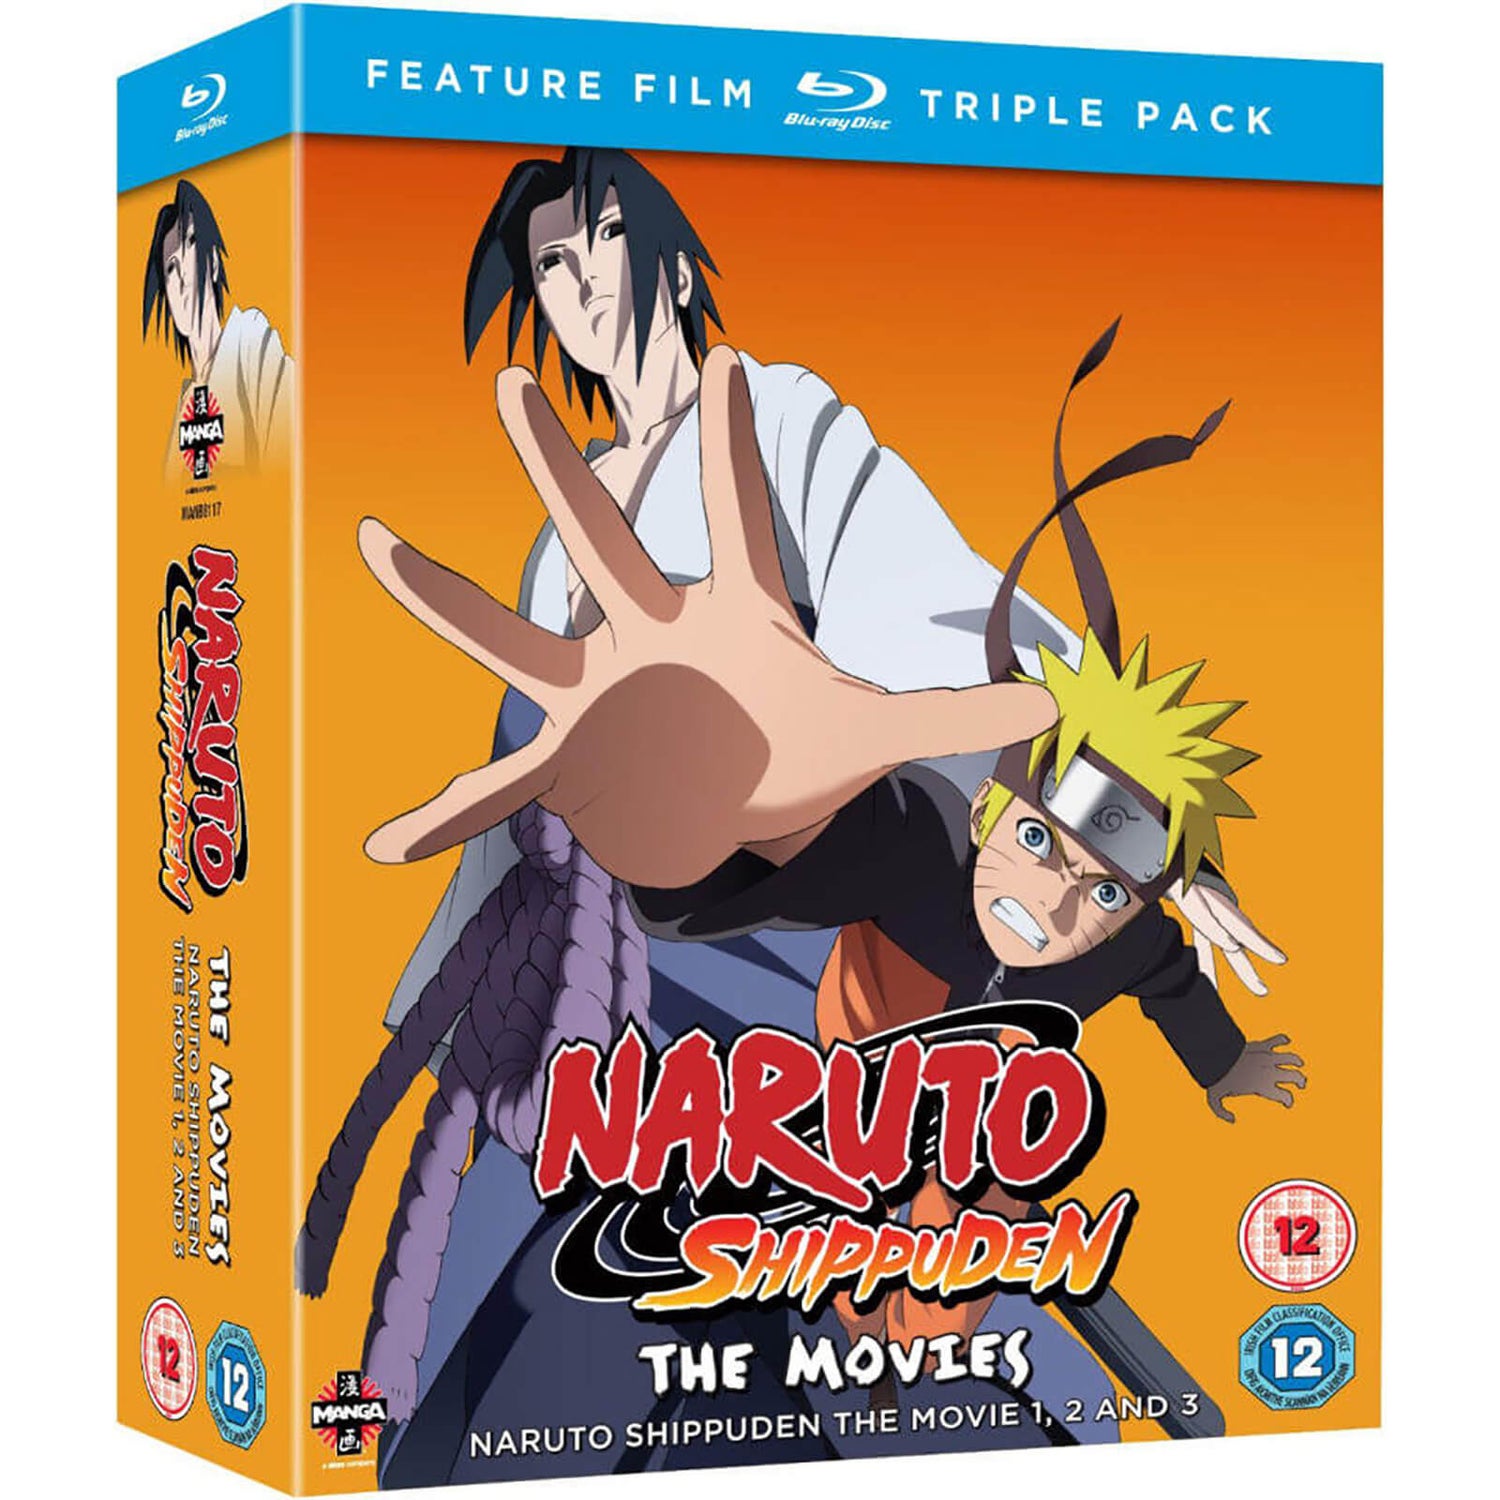 Naruto: 4-movie Collection (DVD) 